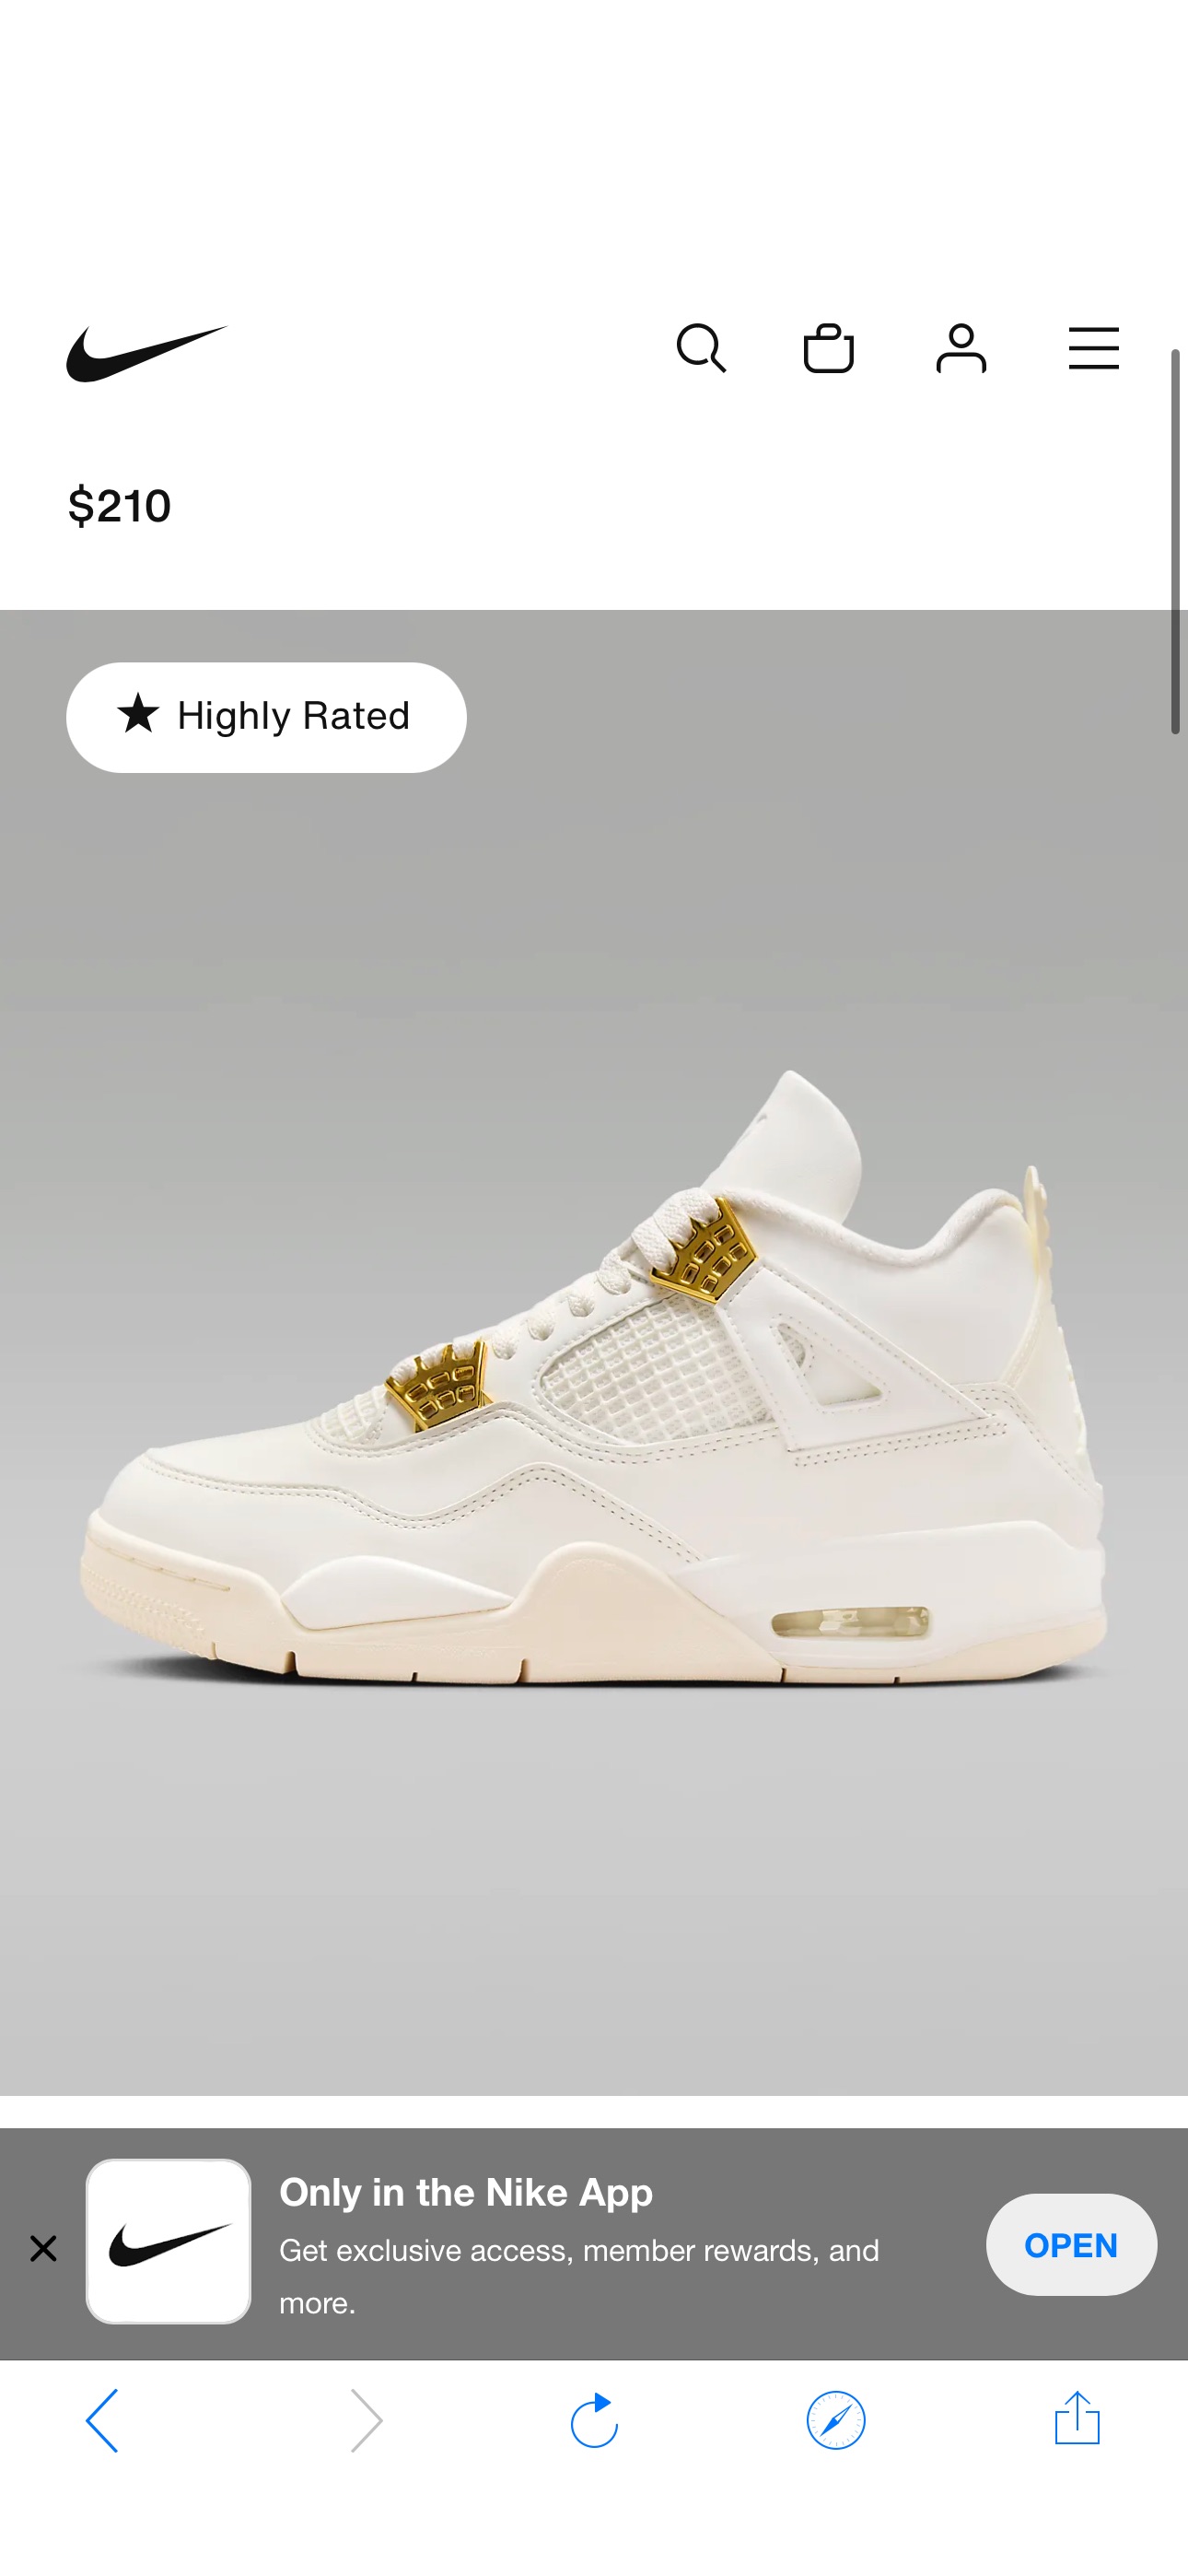 Air Jordan 4 Retro "White & Gold" Women's Shoes. Nike.com Back in Stock 
Air Jordan 4 Retro "White & Gold"